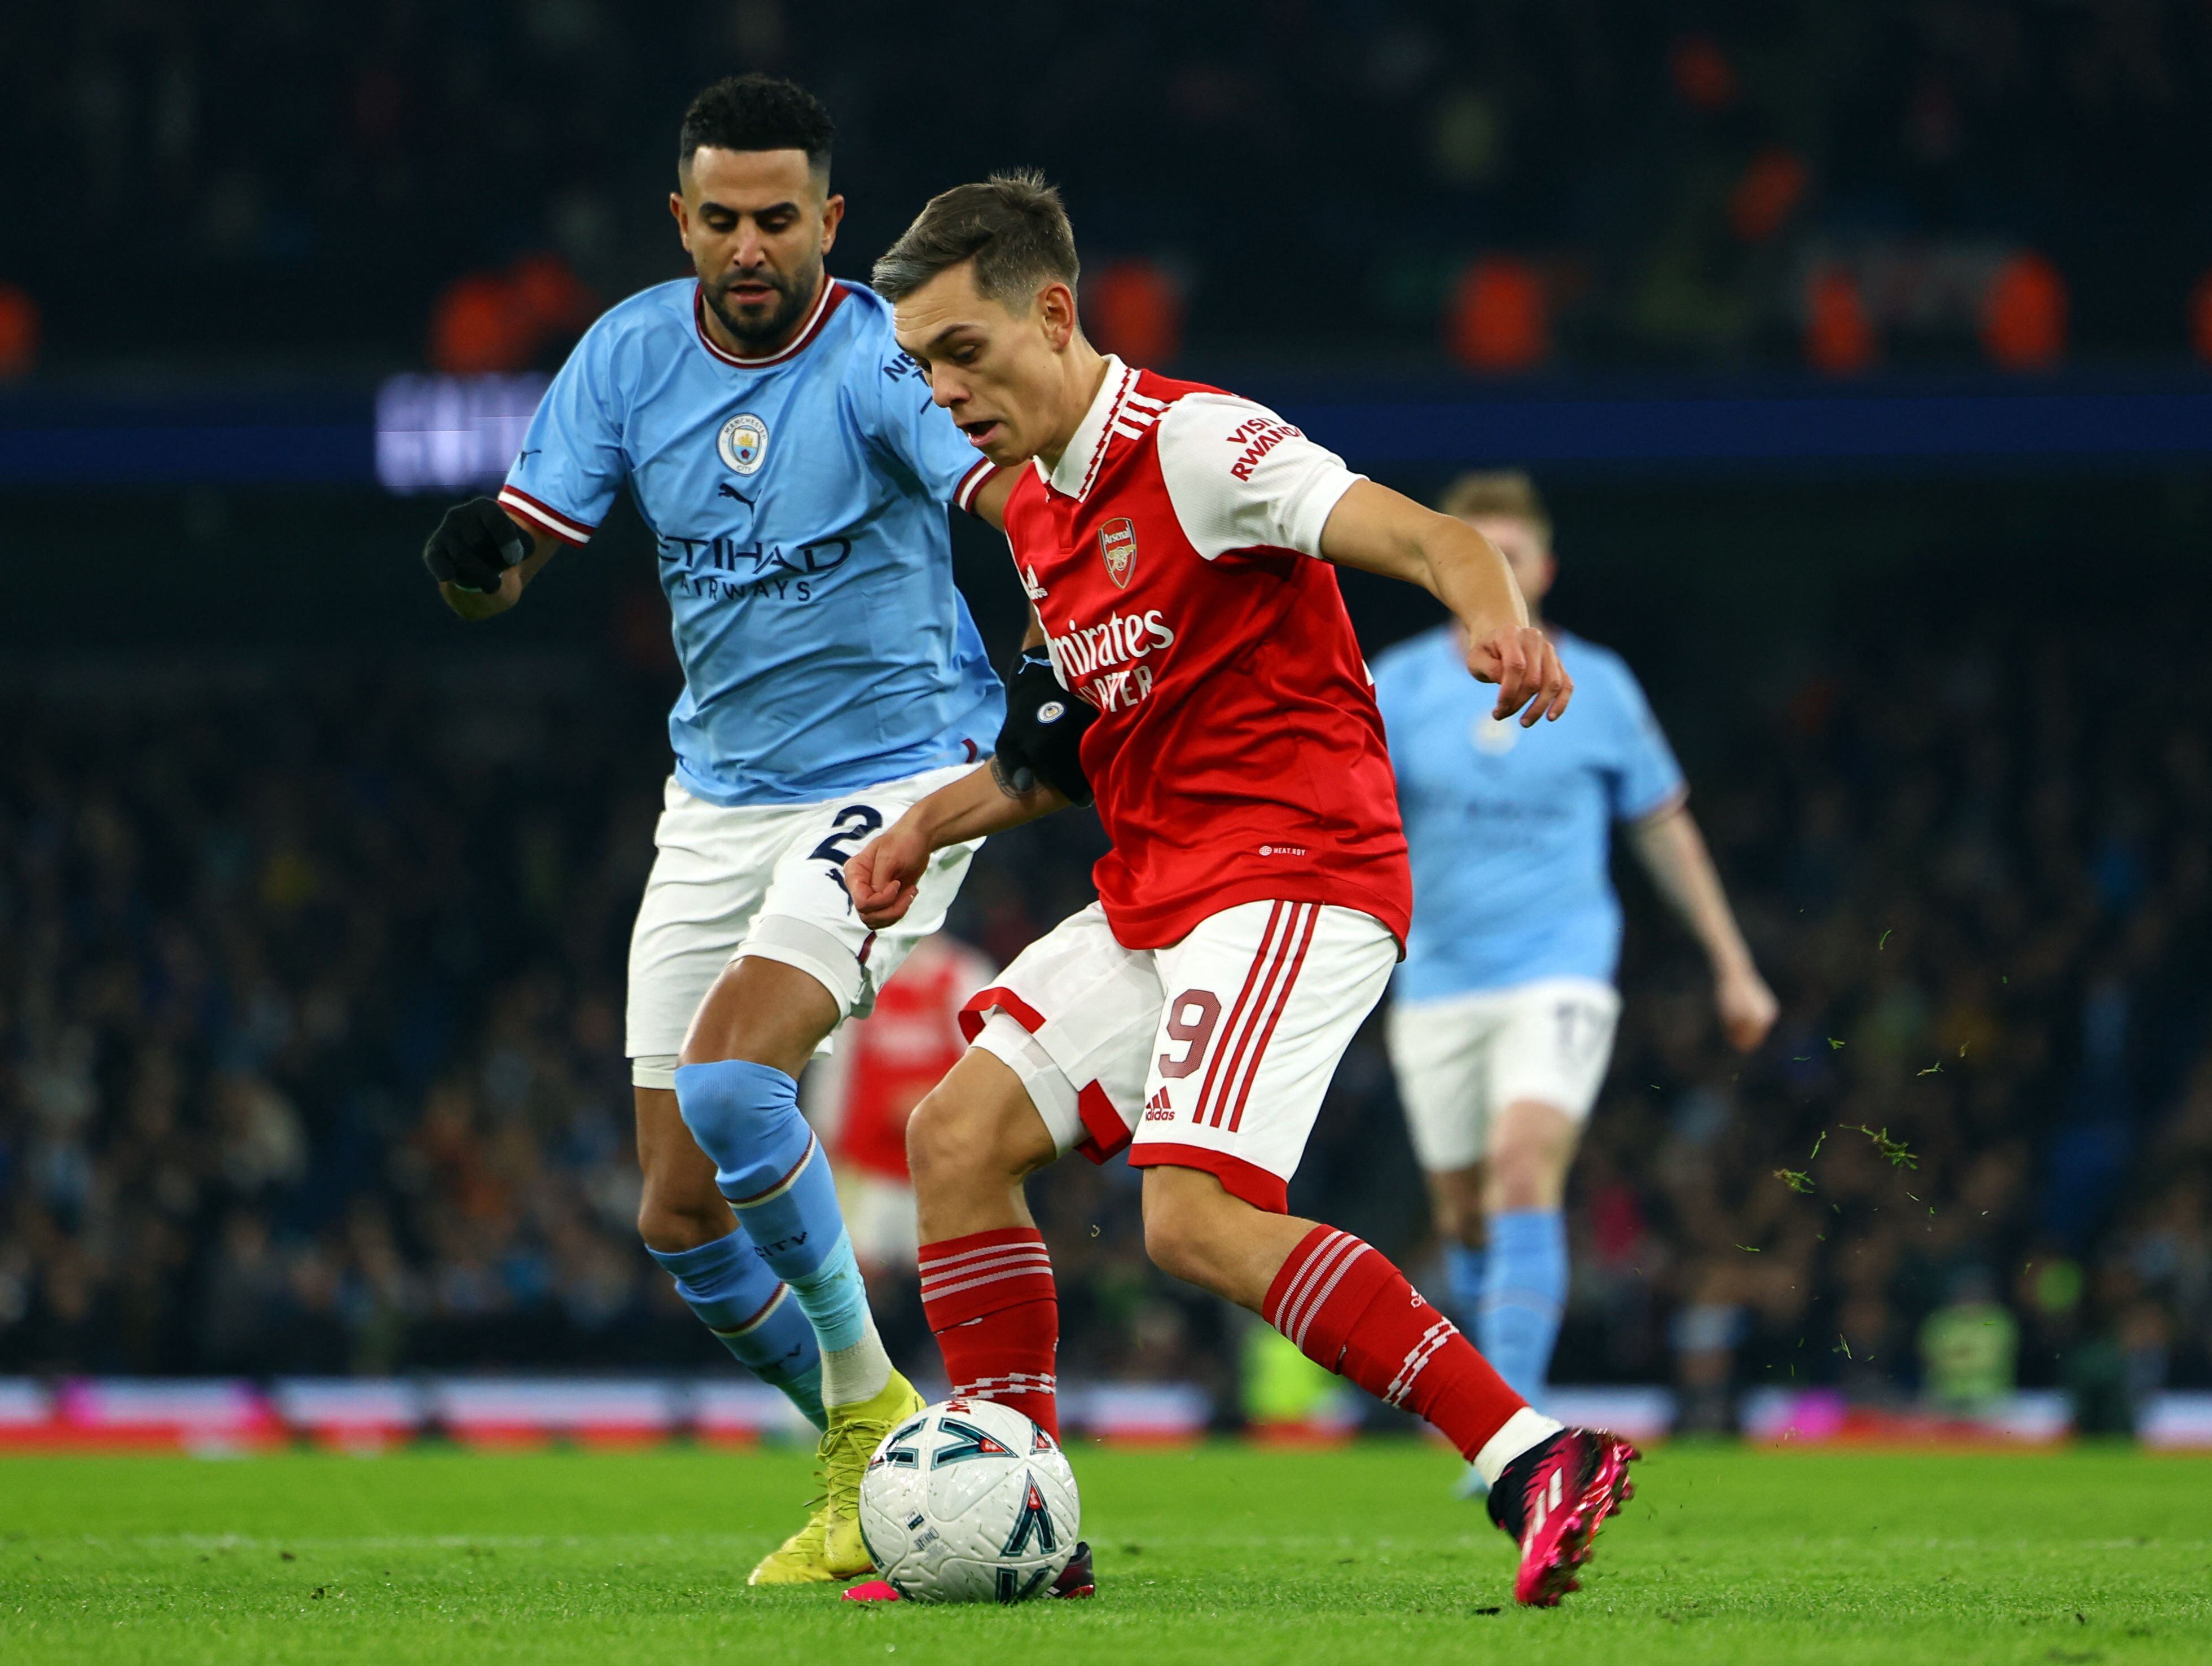 Manchester City venció en el último juego a Arsenal en la FA Cup. REUTERS/Molly Darlington